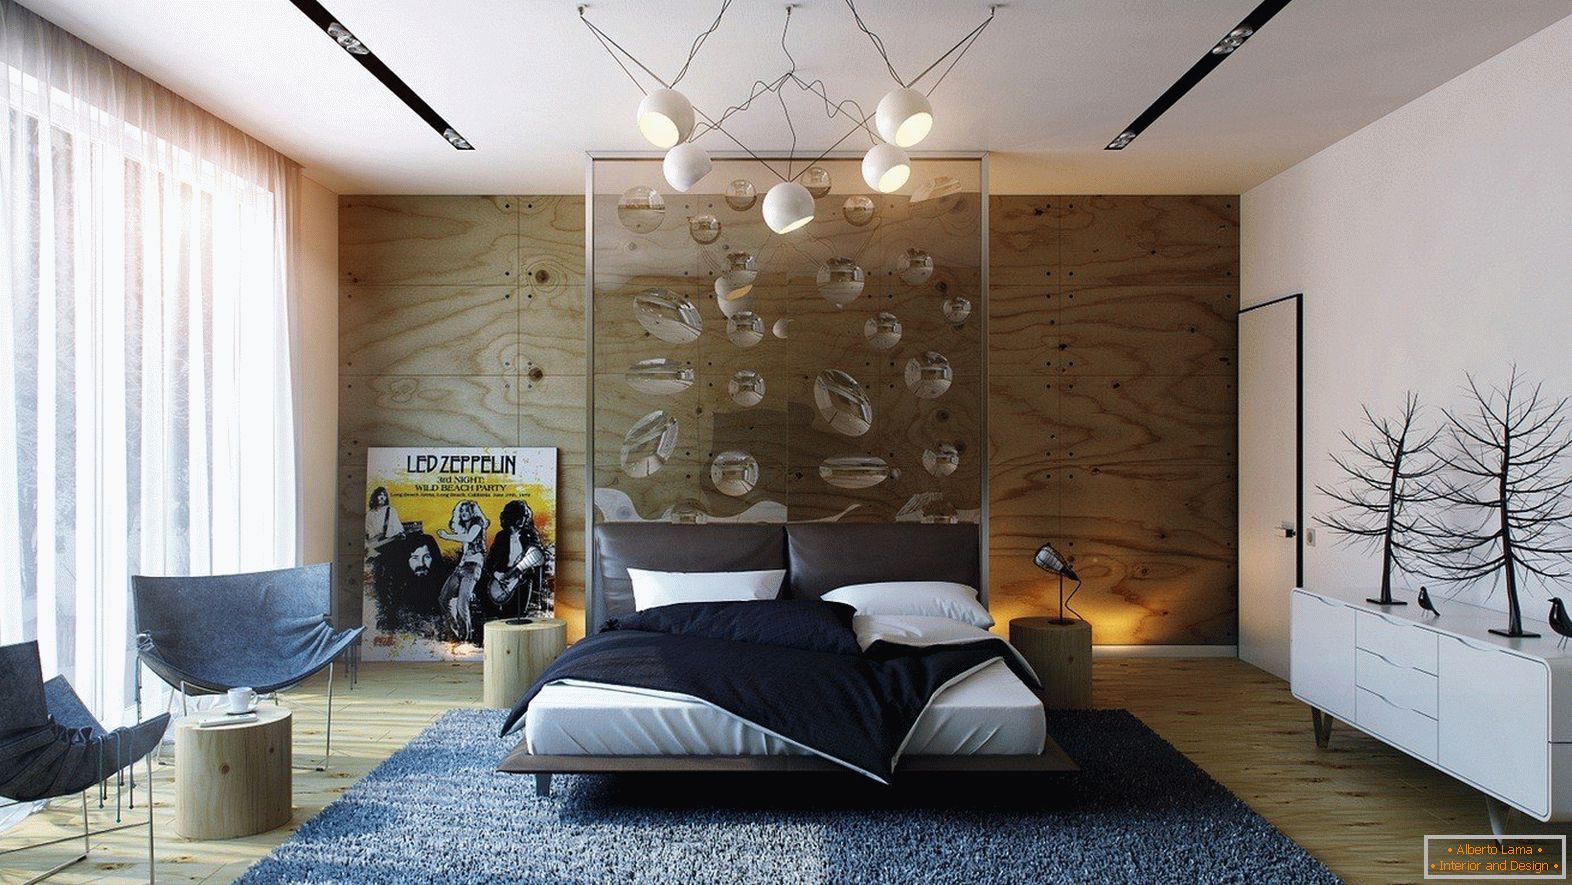 Modern design of the bedroom interior